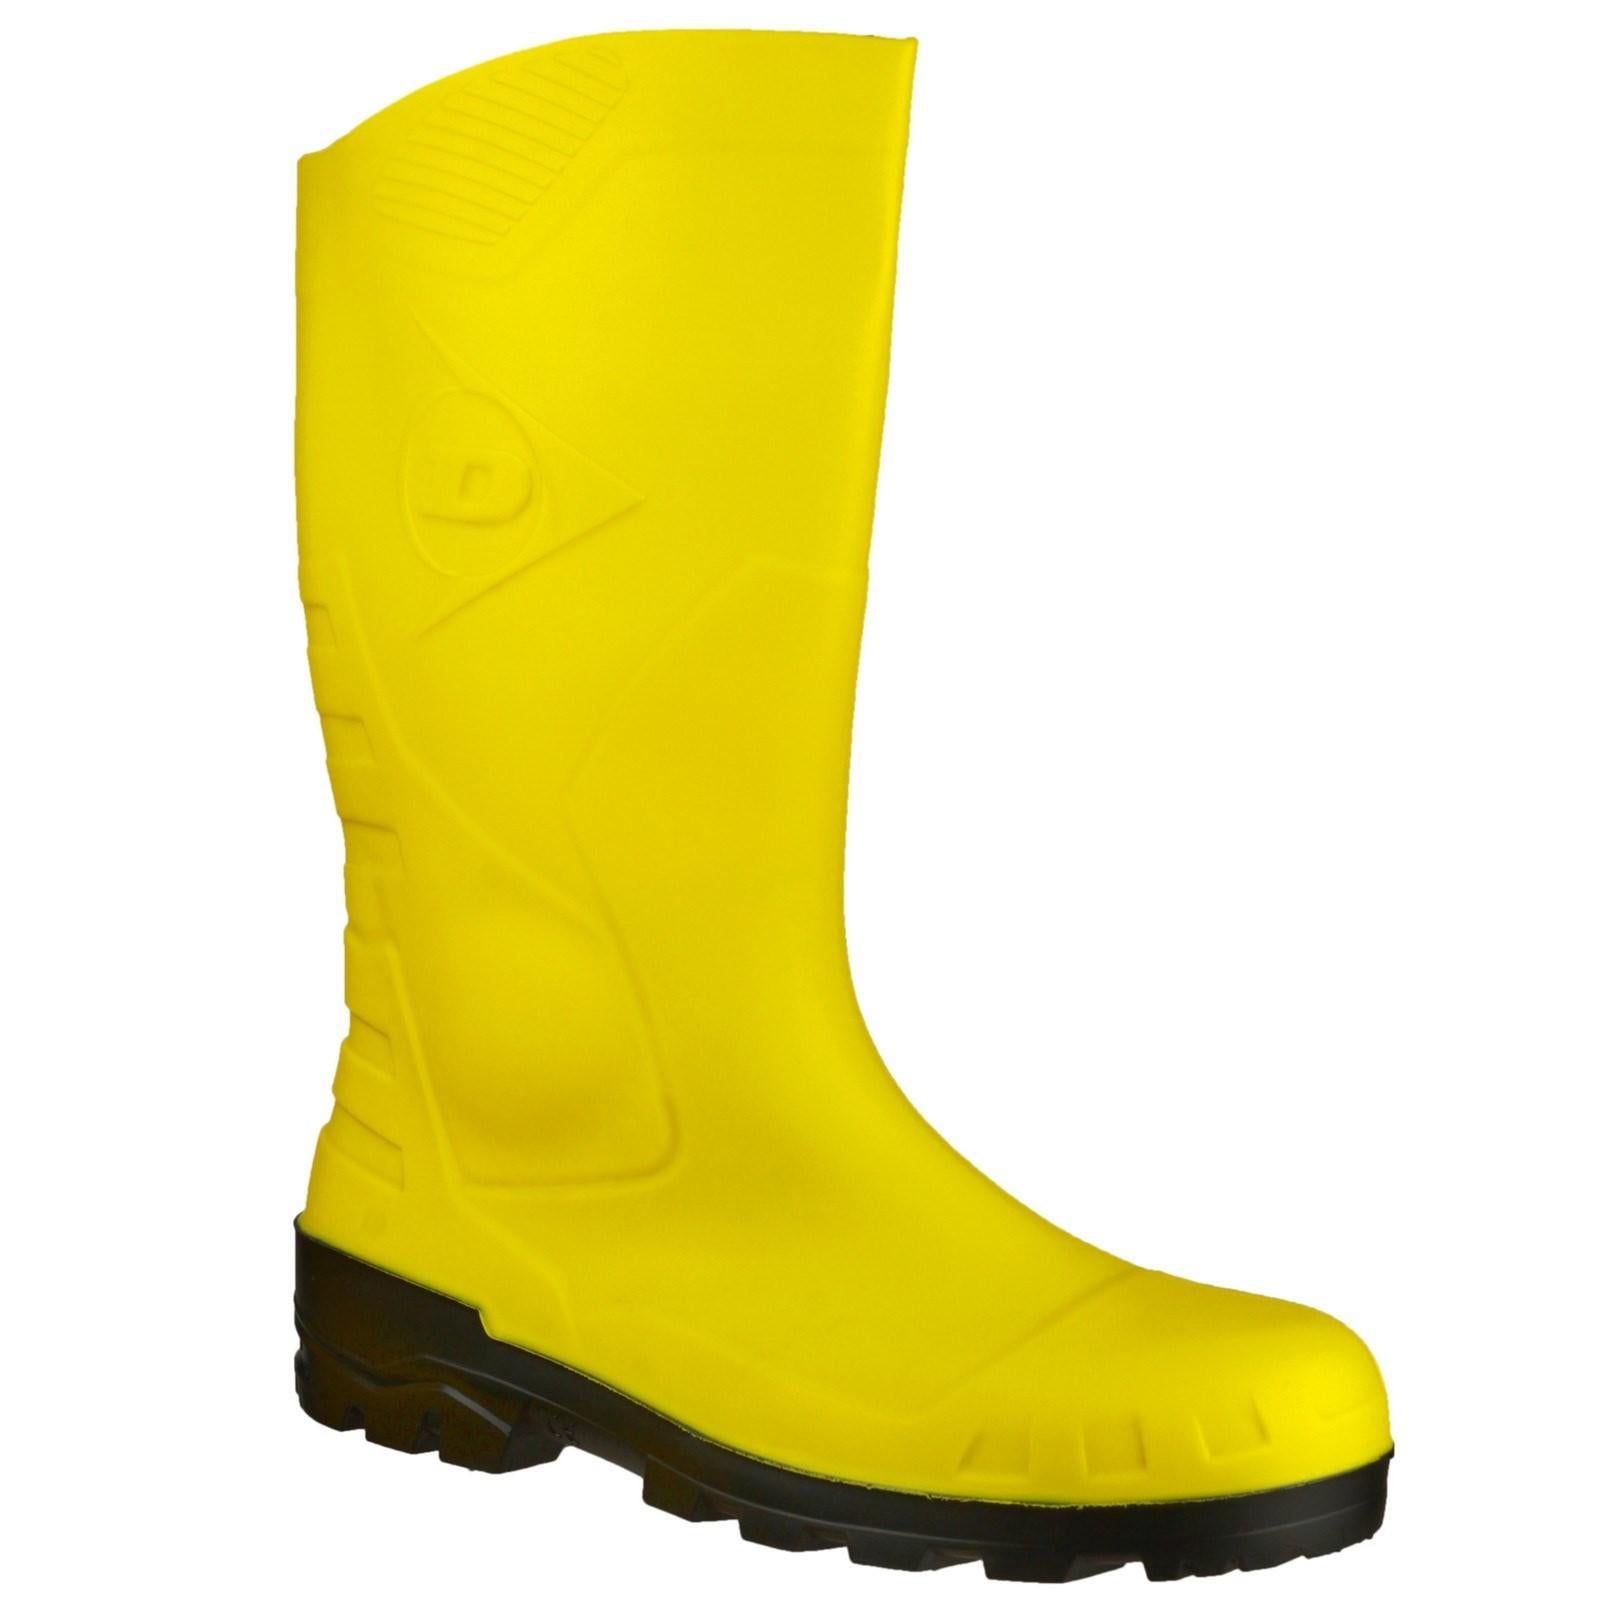 Dunlop Protective Footwear Devon Full Safety Wellington Boots